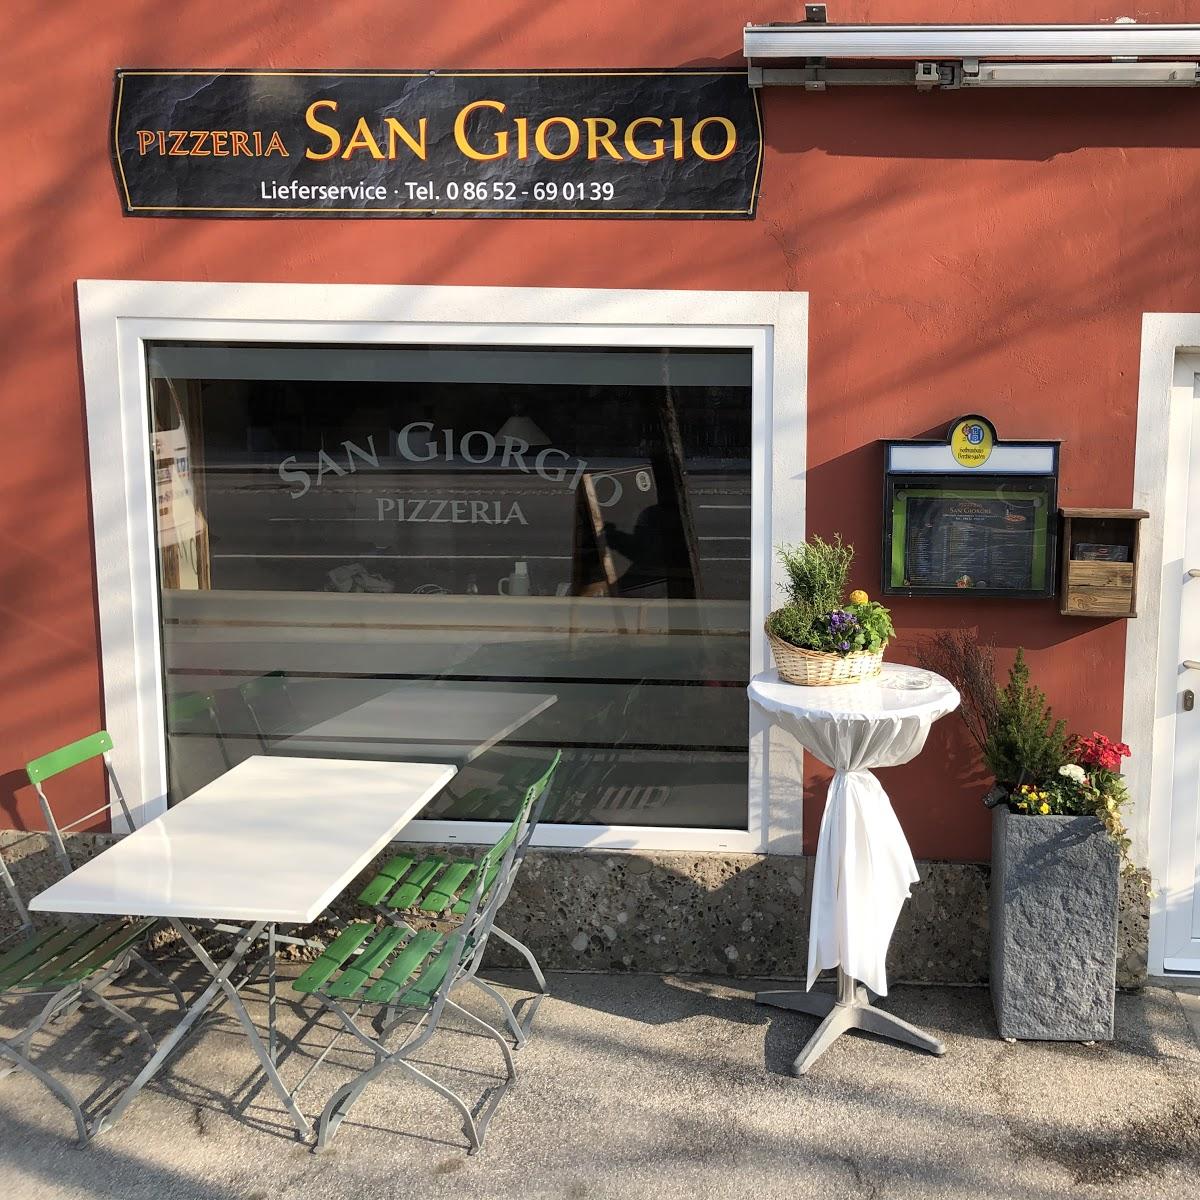 Restaurant "Pizzeria San Giorgio" in Berchtesgaden